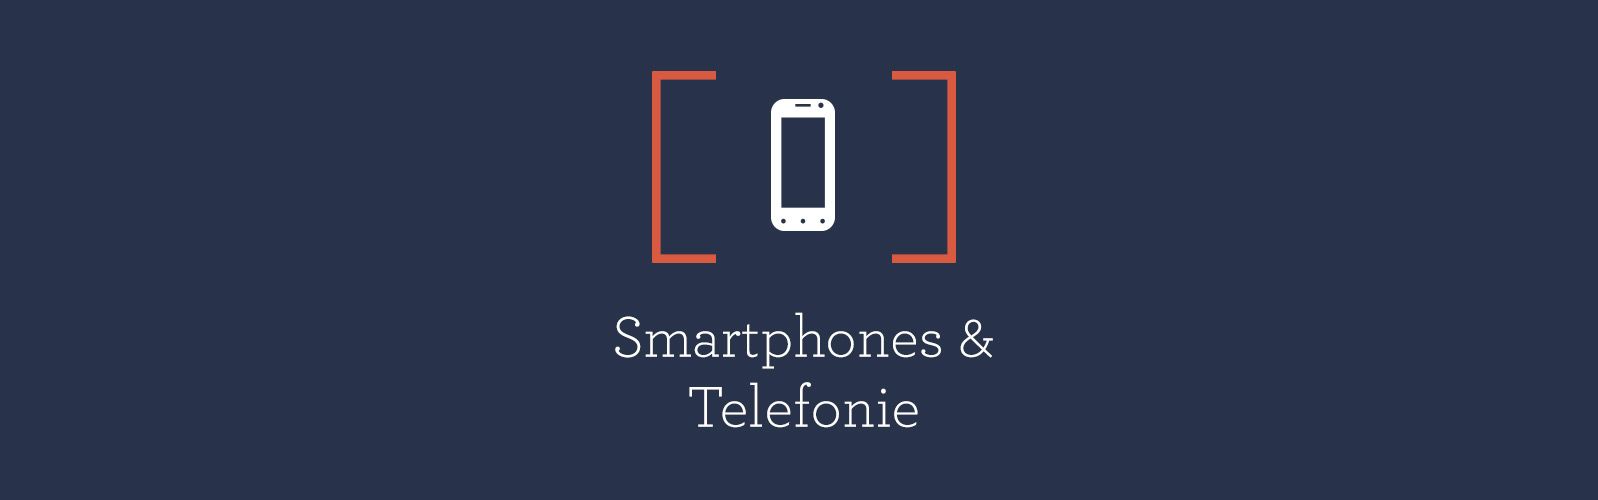 Smartphones & Telefonie